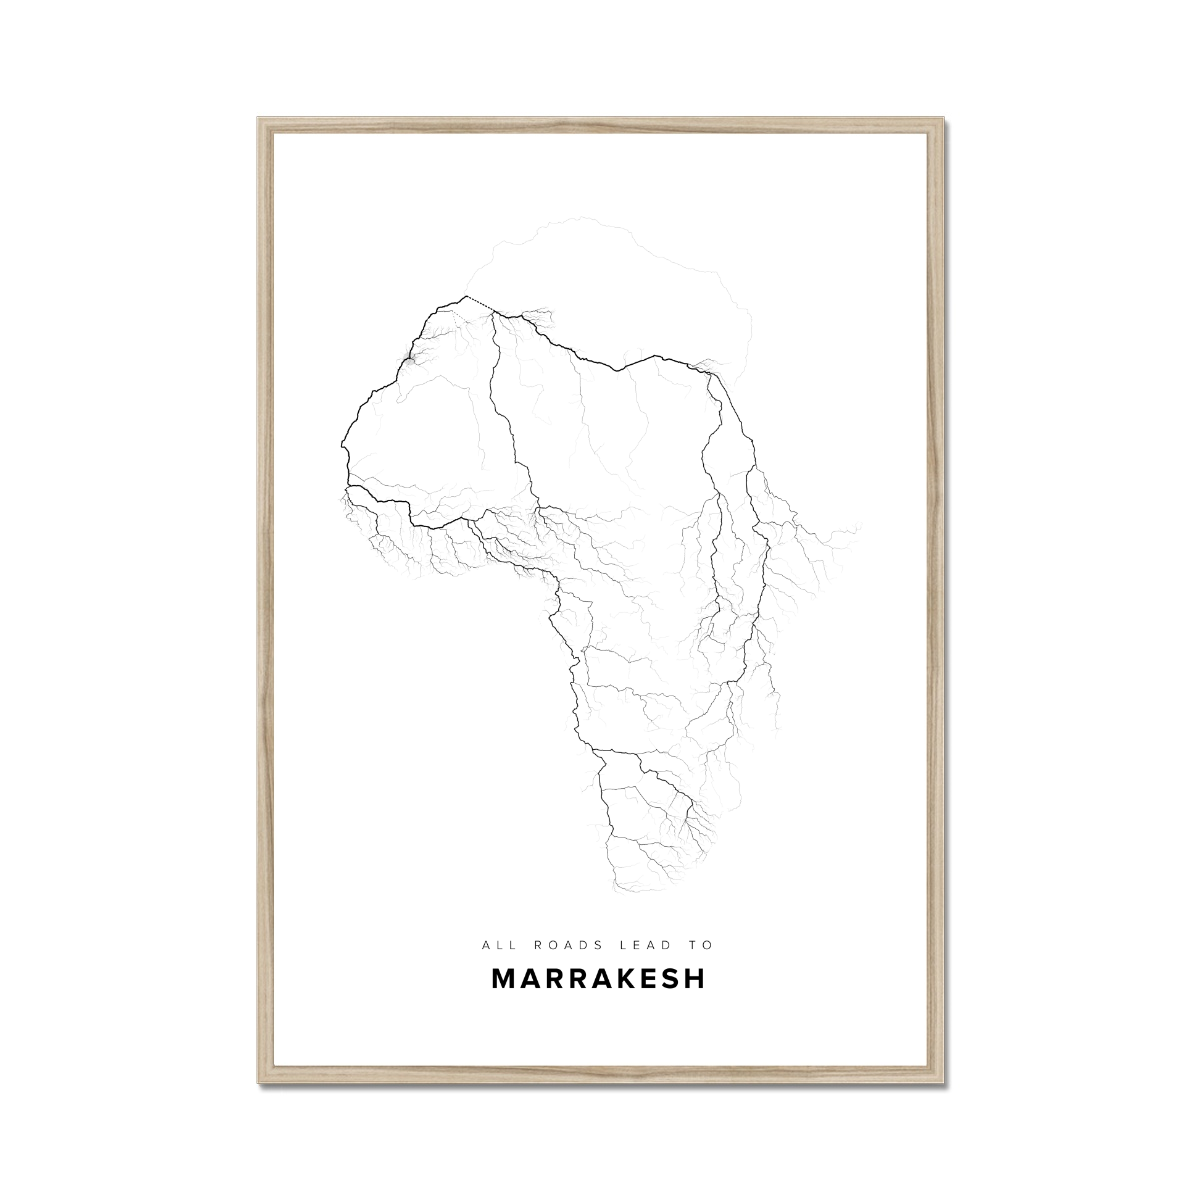 All roads lead to Marrakesh (Morocco) Fine Art Map Print